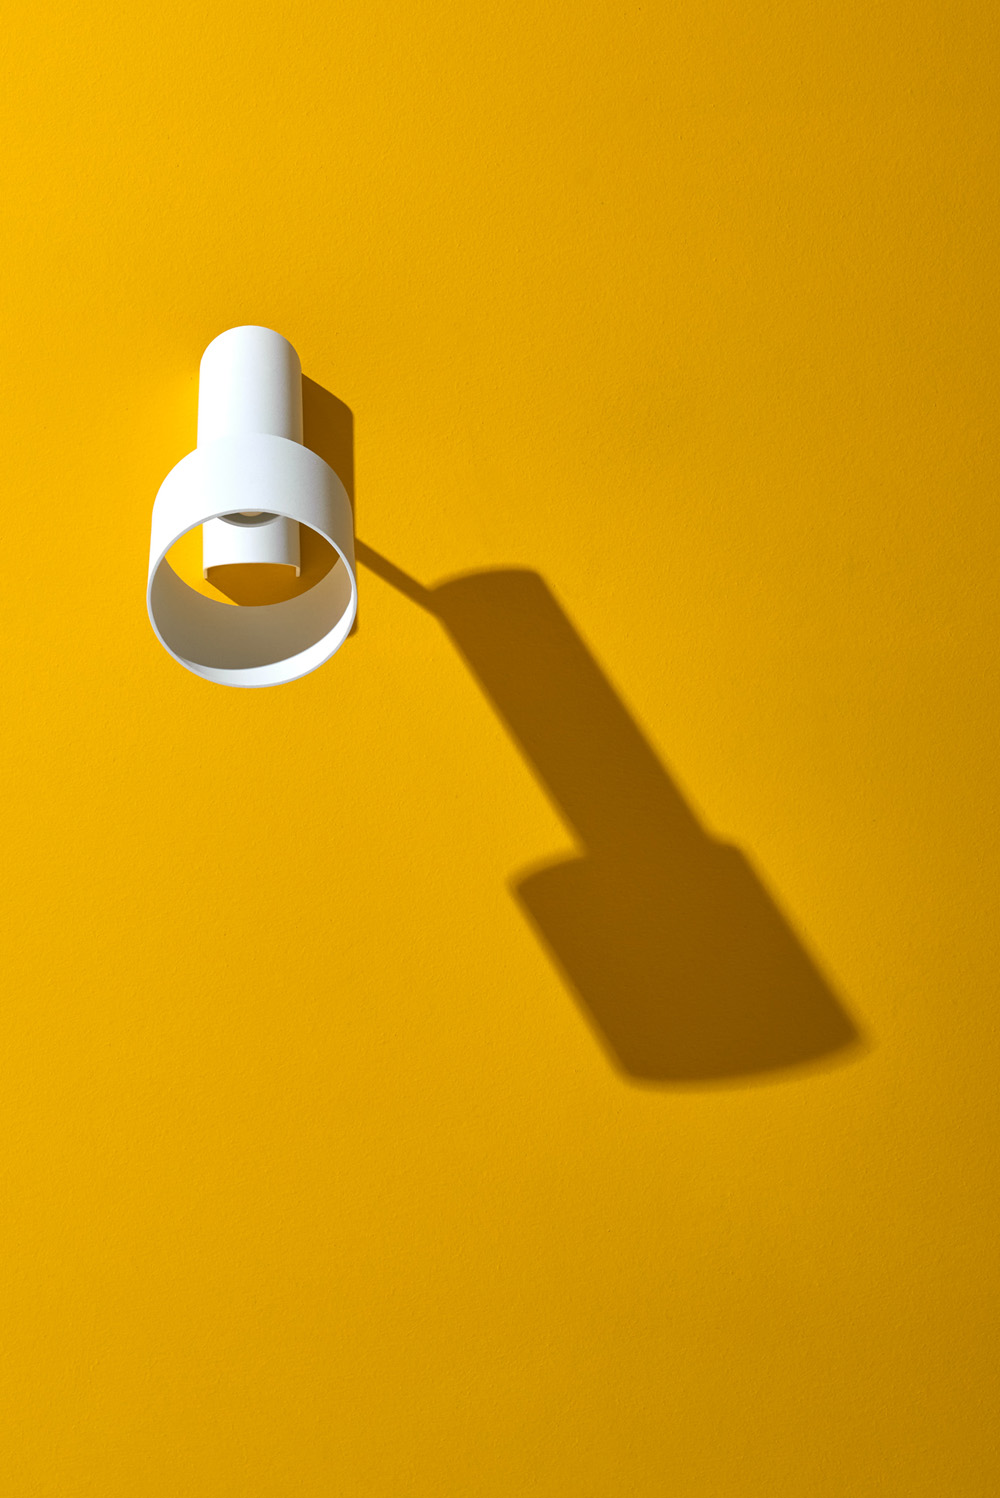 Tangent Wall Lamp by Frederik Kurzweg